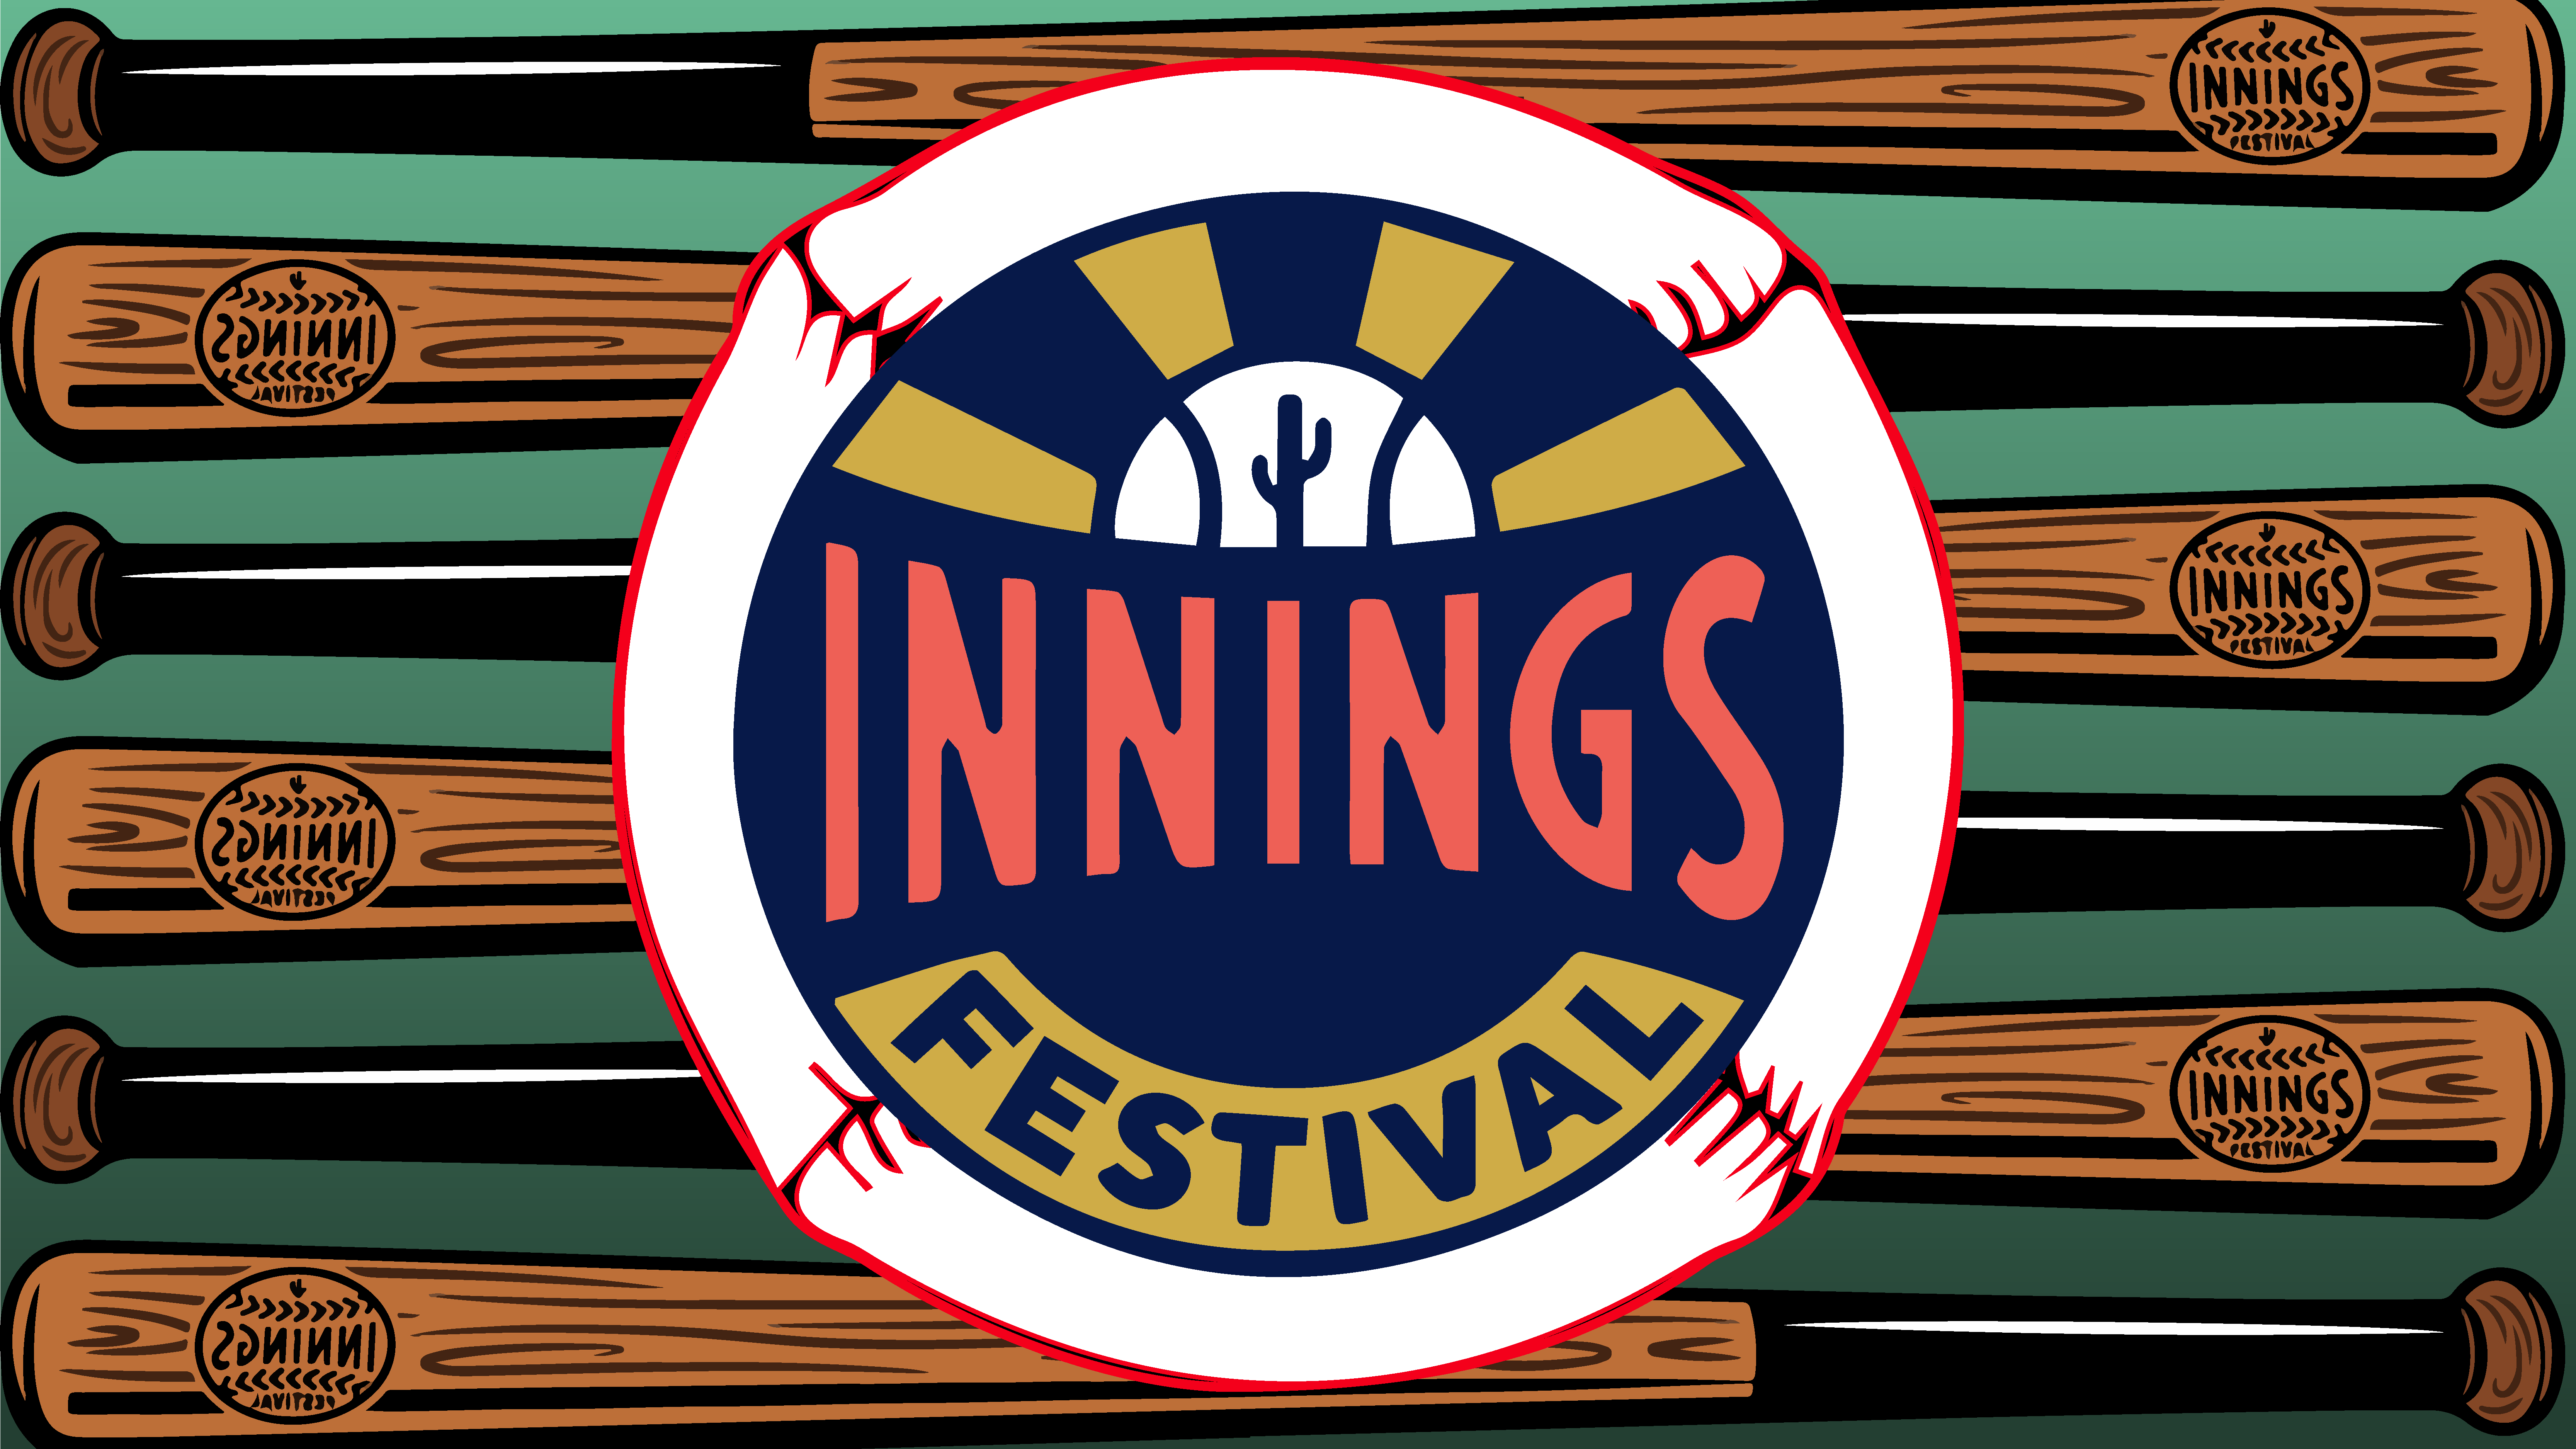 Thumbnail image for Innings Festival in Tempe, Arizona. Baseball and baseball bat theme